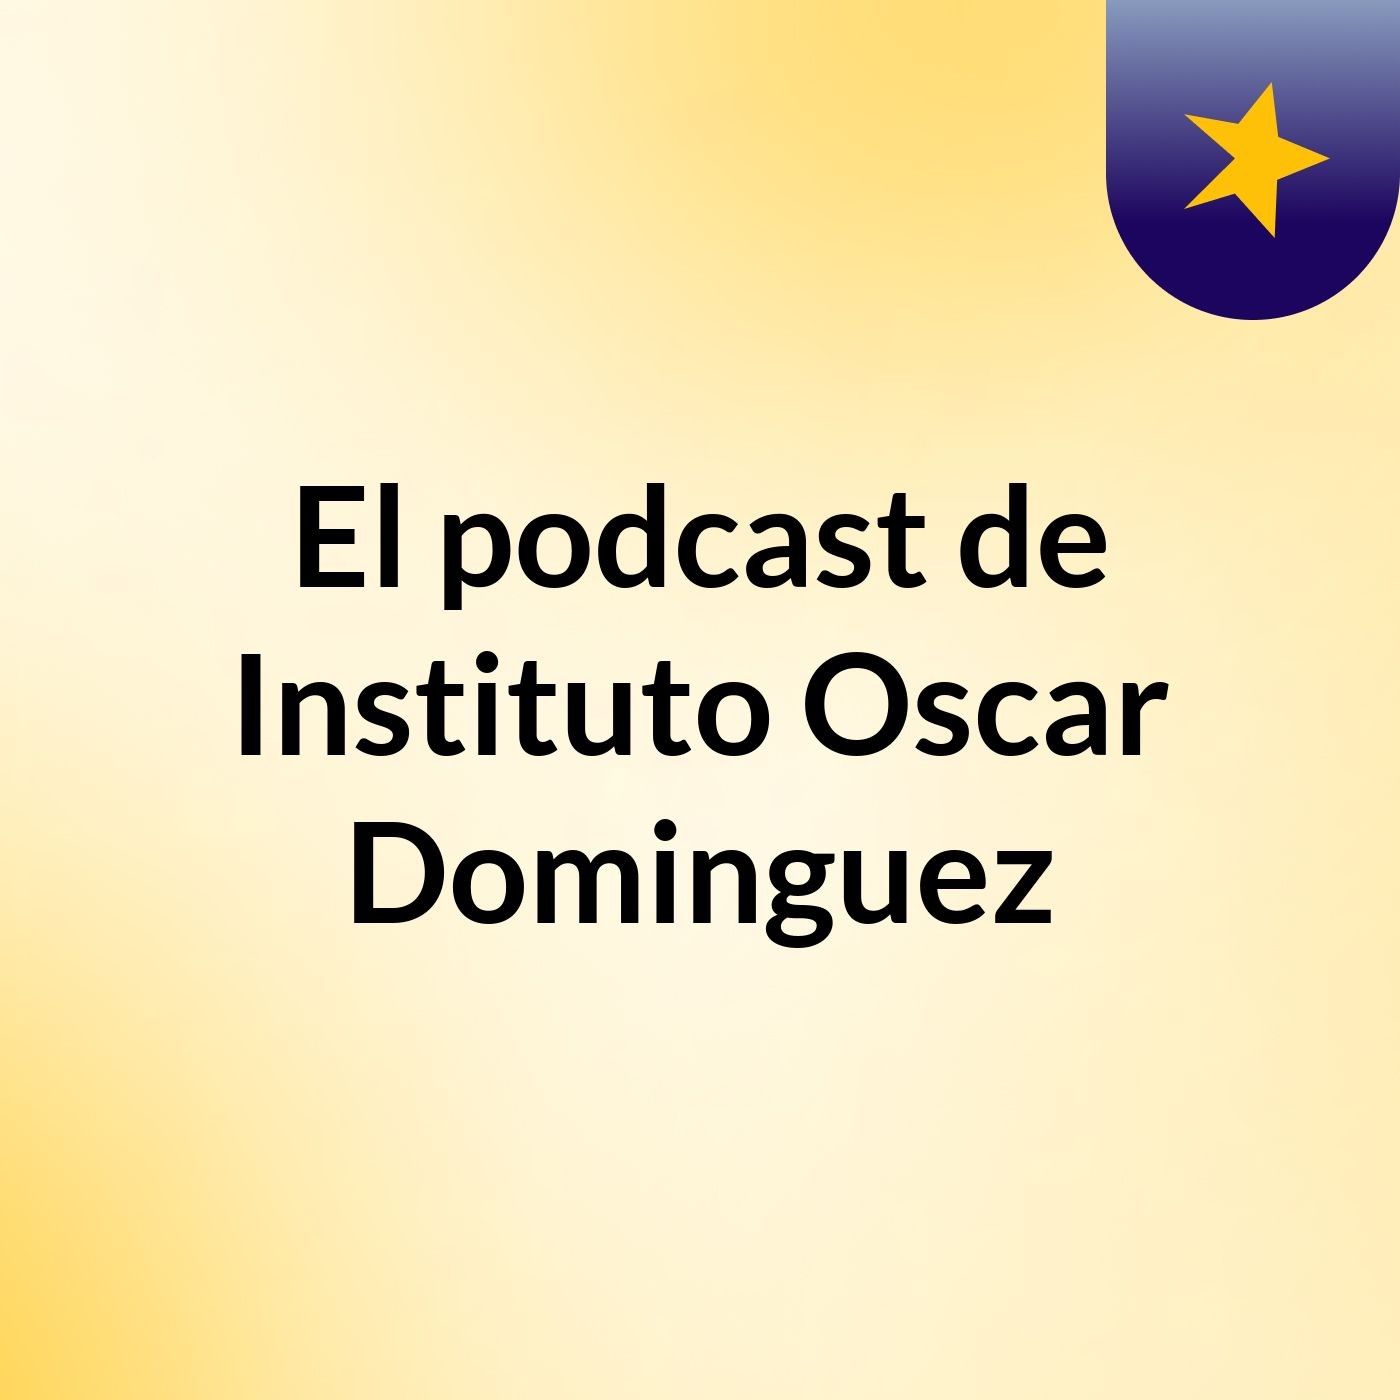 El podcast de Instituto Oscar Dominguez 